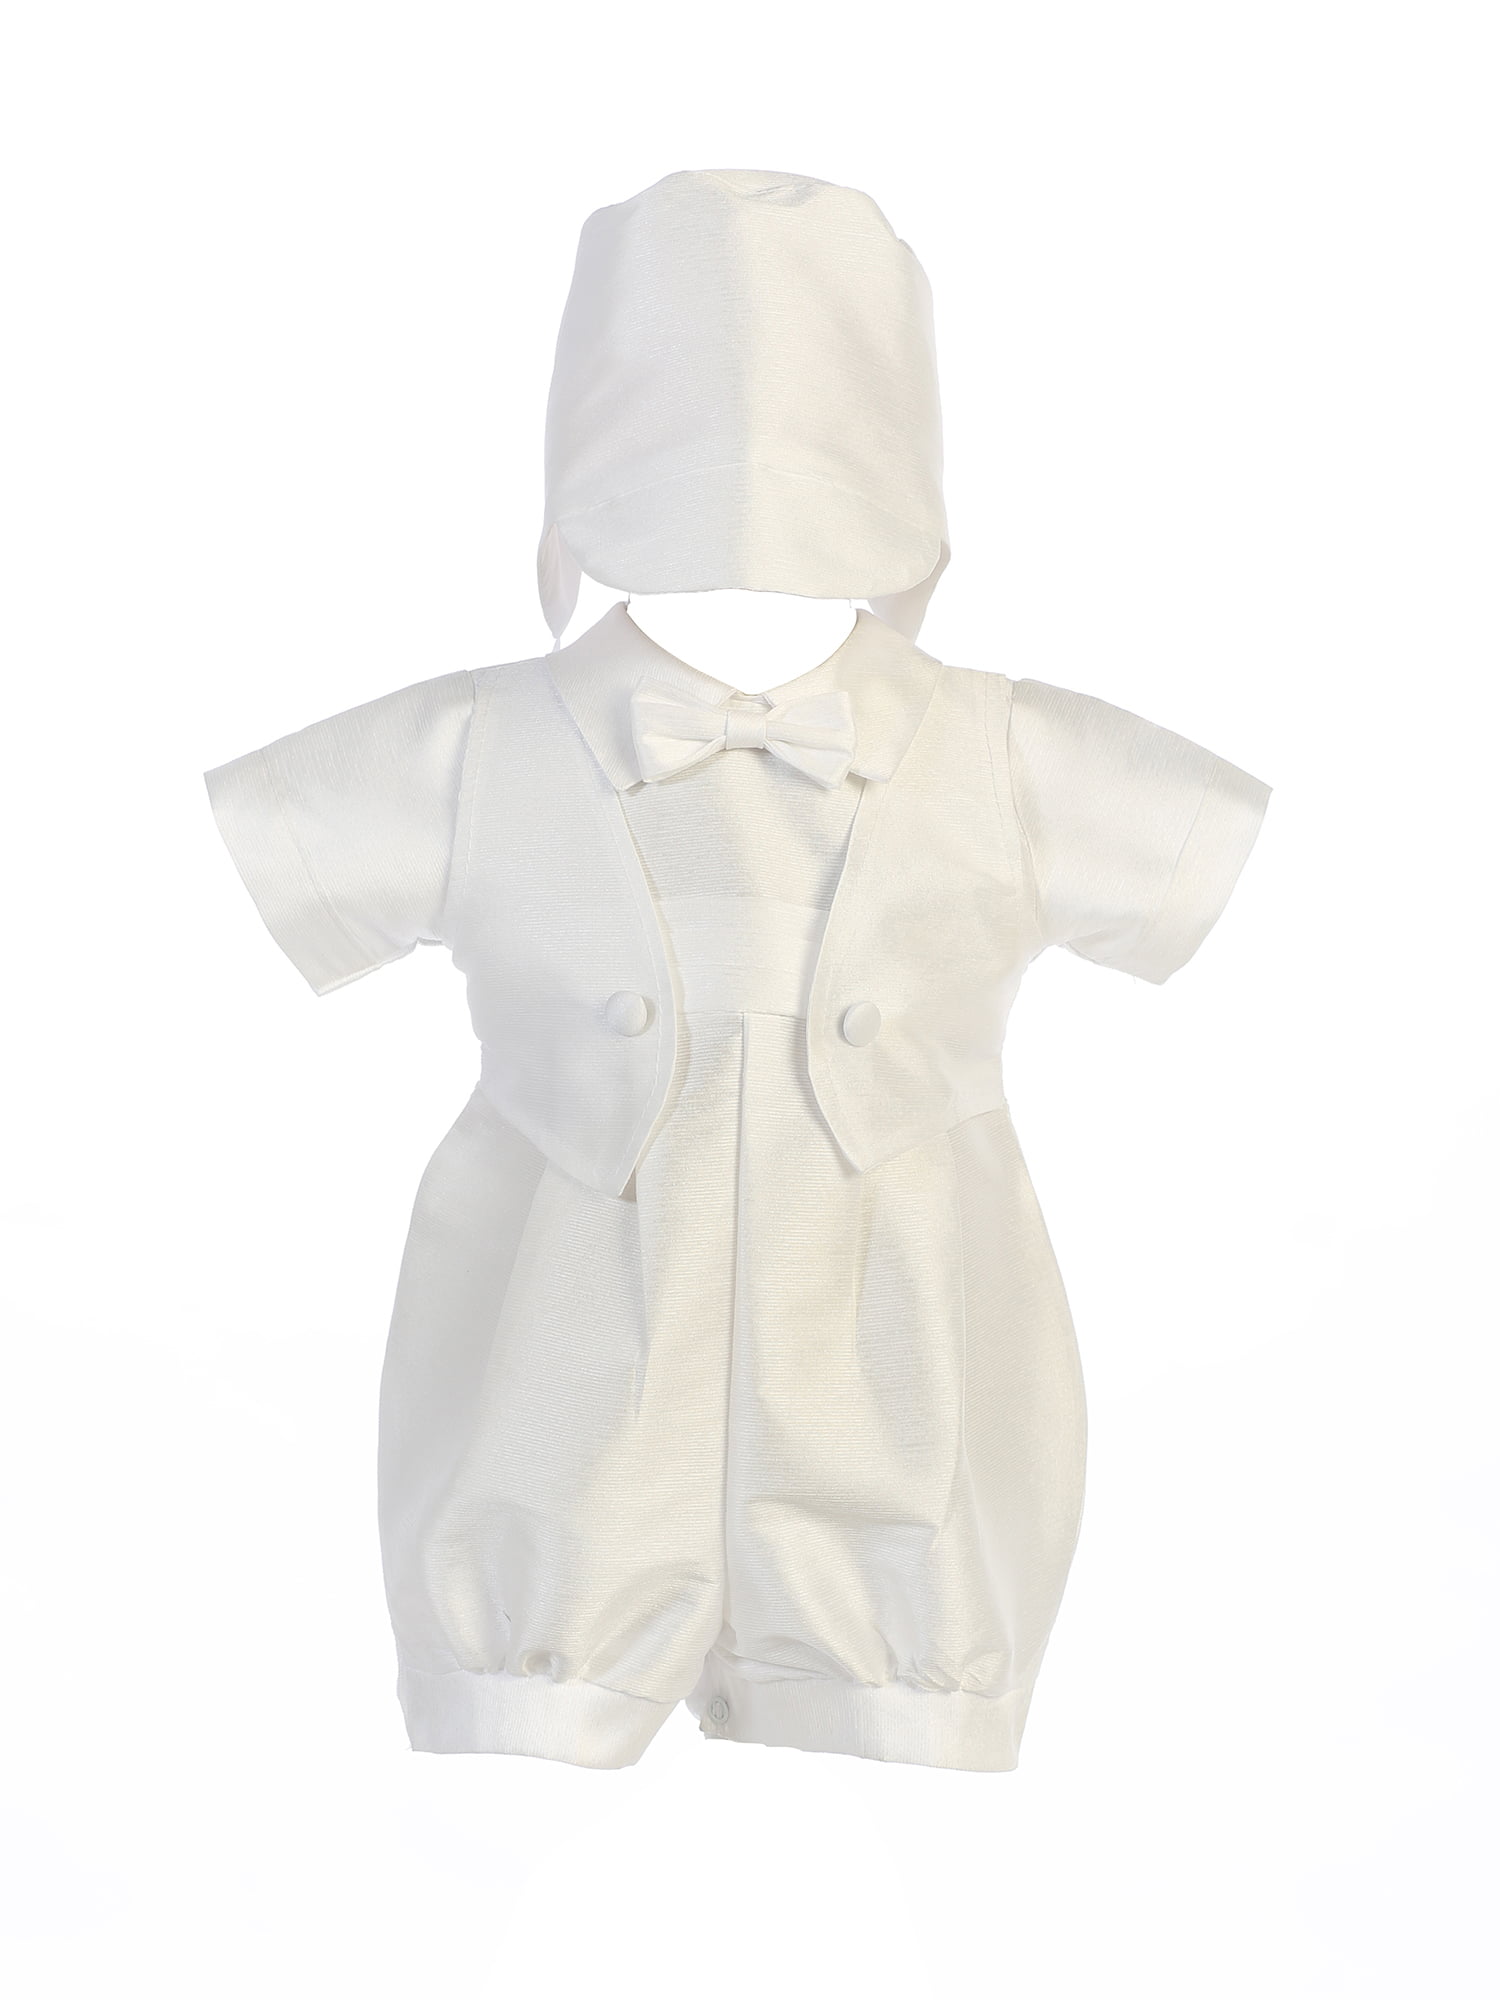 5pc White Baby Little Boy Christening Baptism Shorts Vest Set Hat S-4T S: 0-6 months 